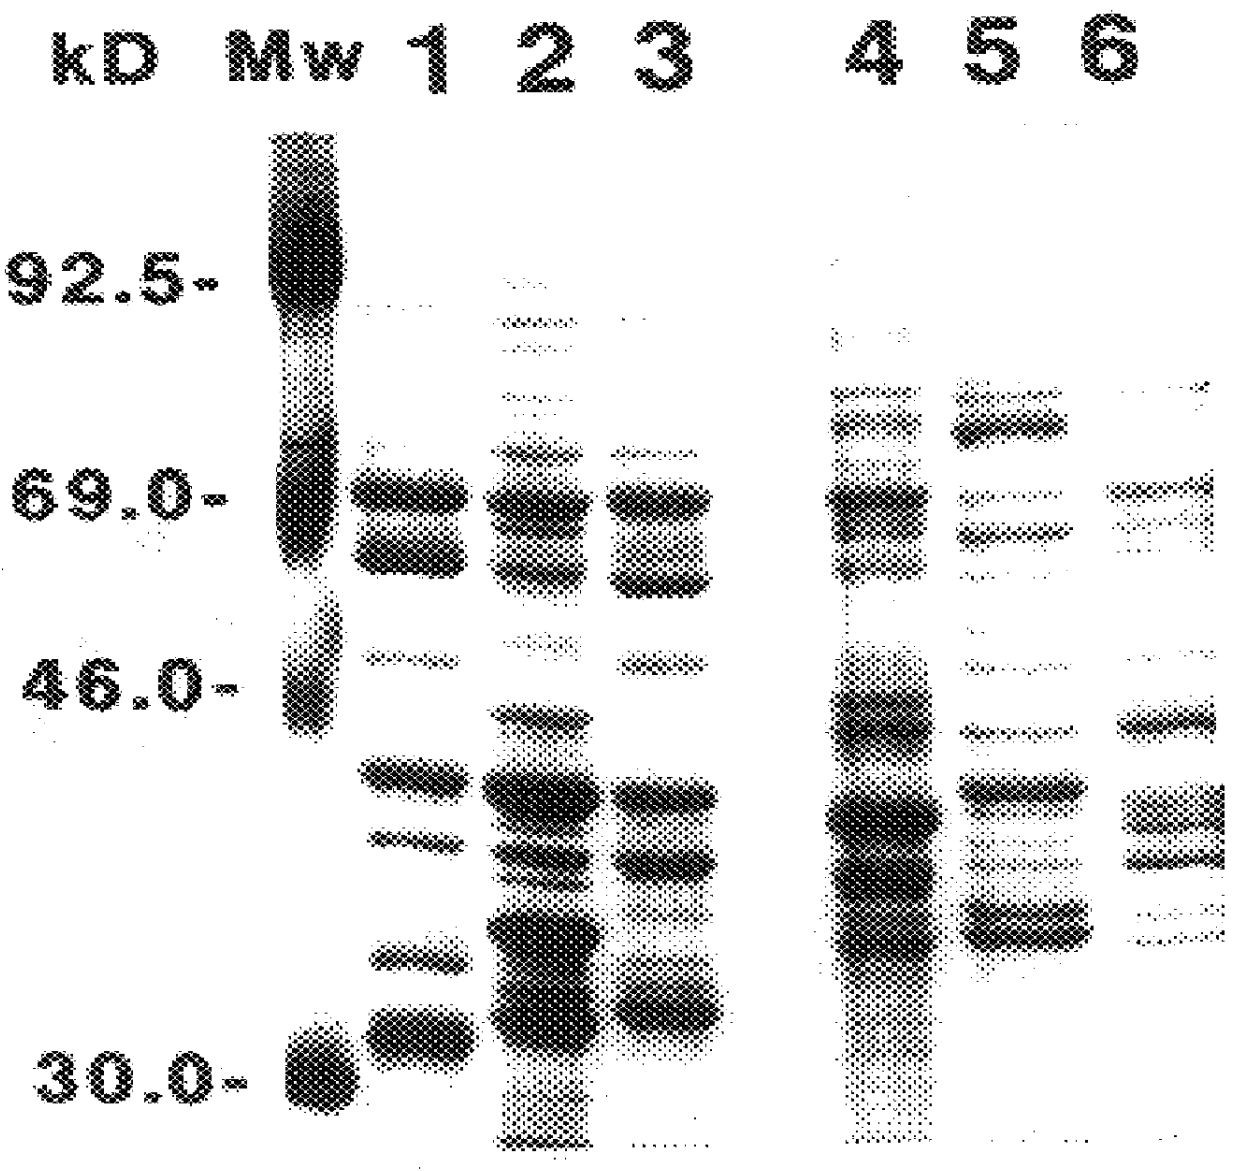 66 kDa antigen from Borrelia